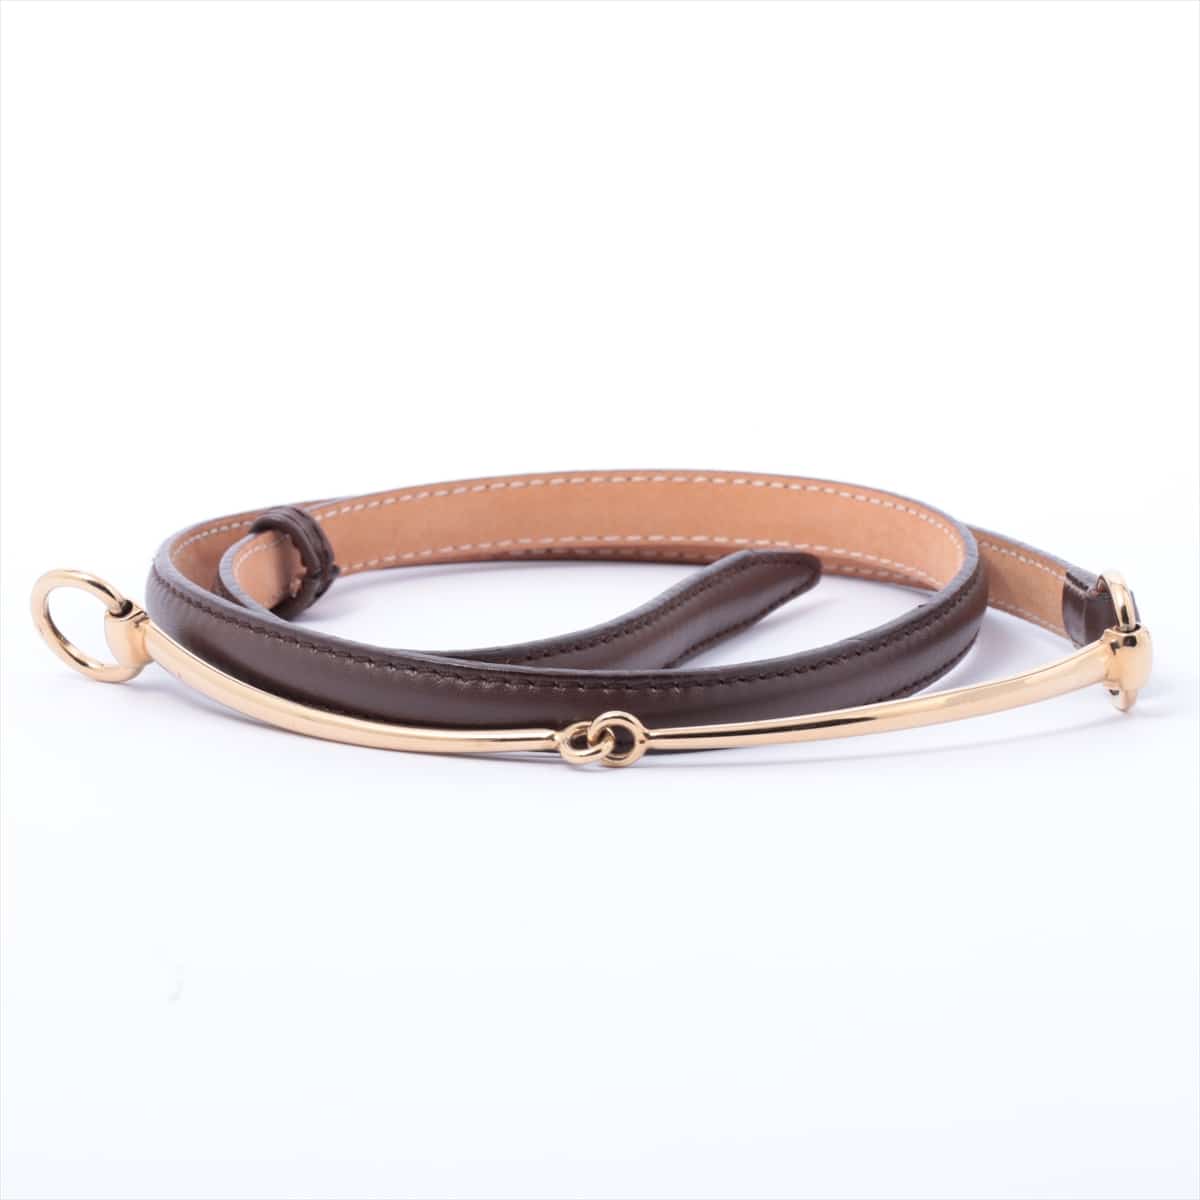 Gucci Horsebit Belt 75/30 Leather Brown